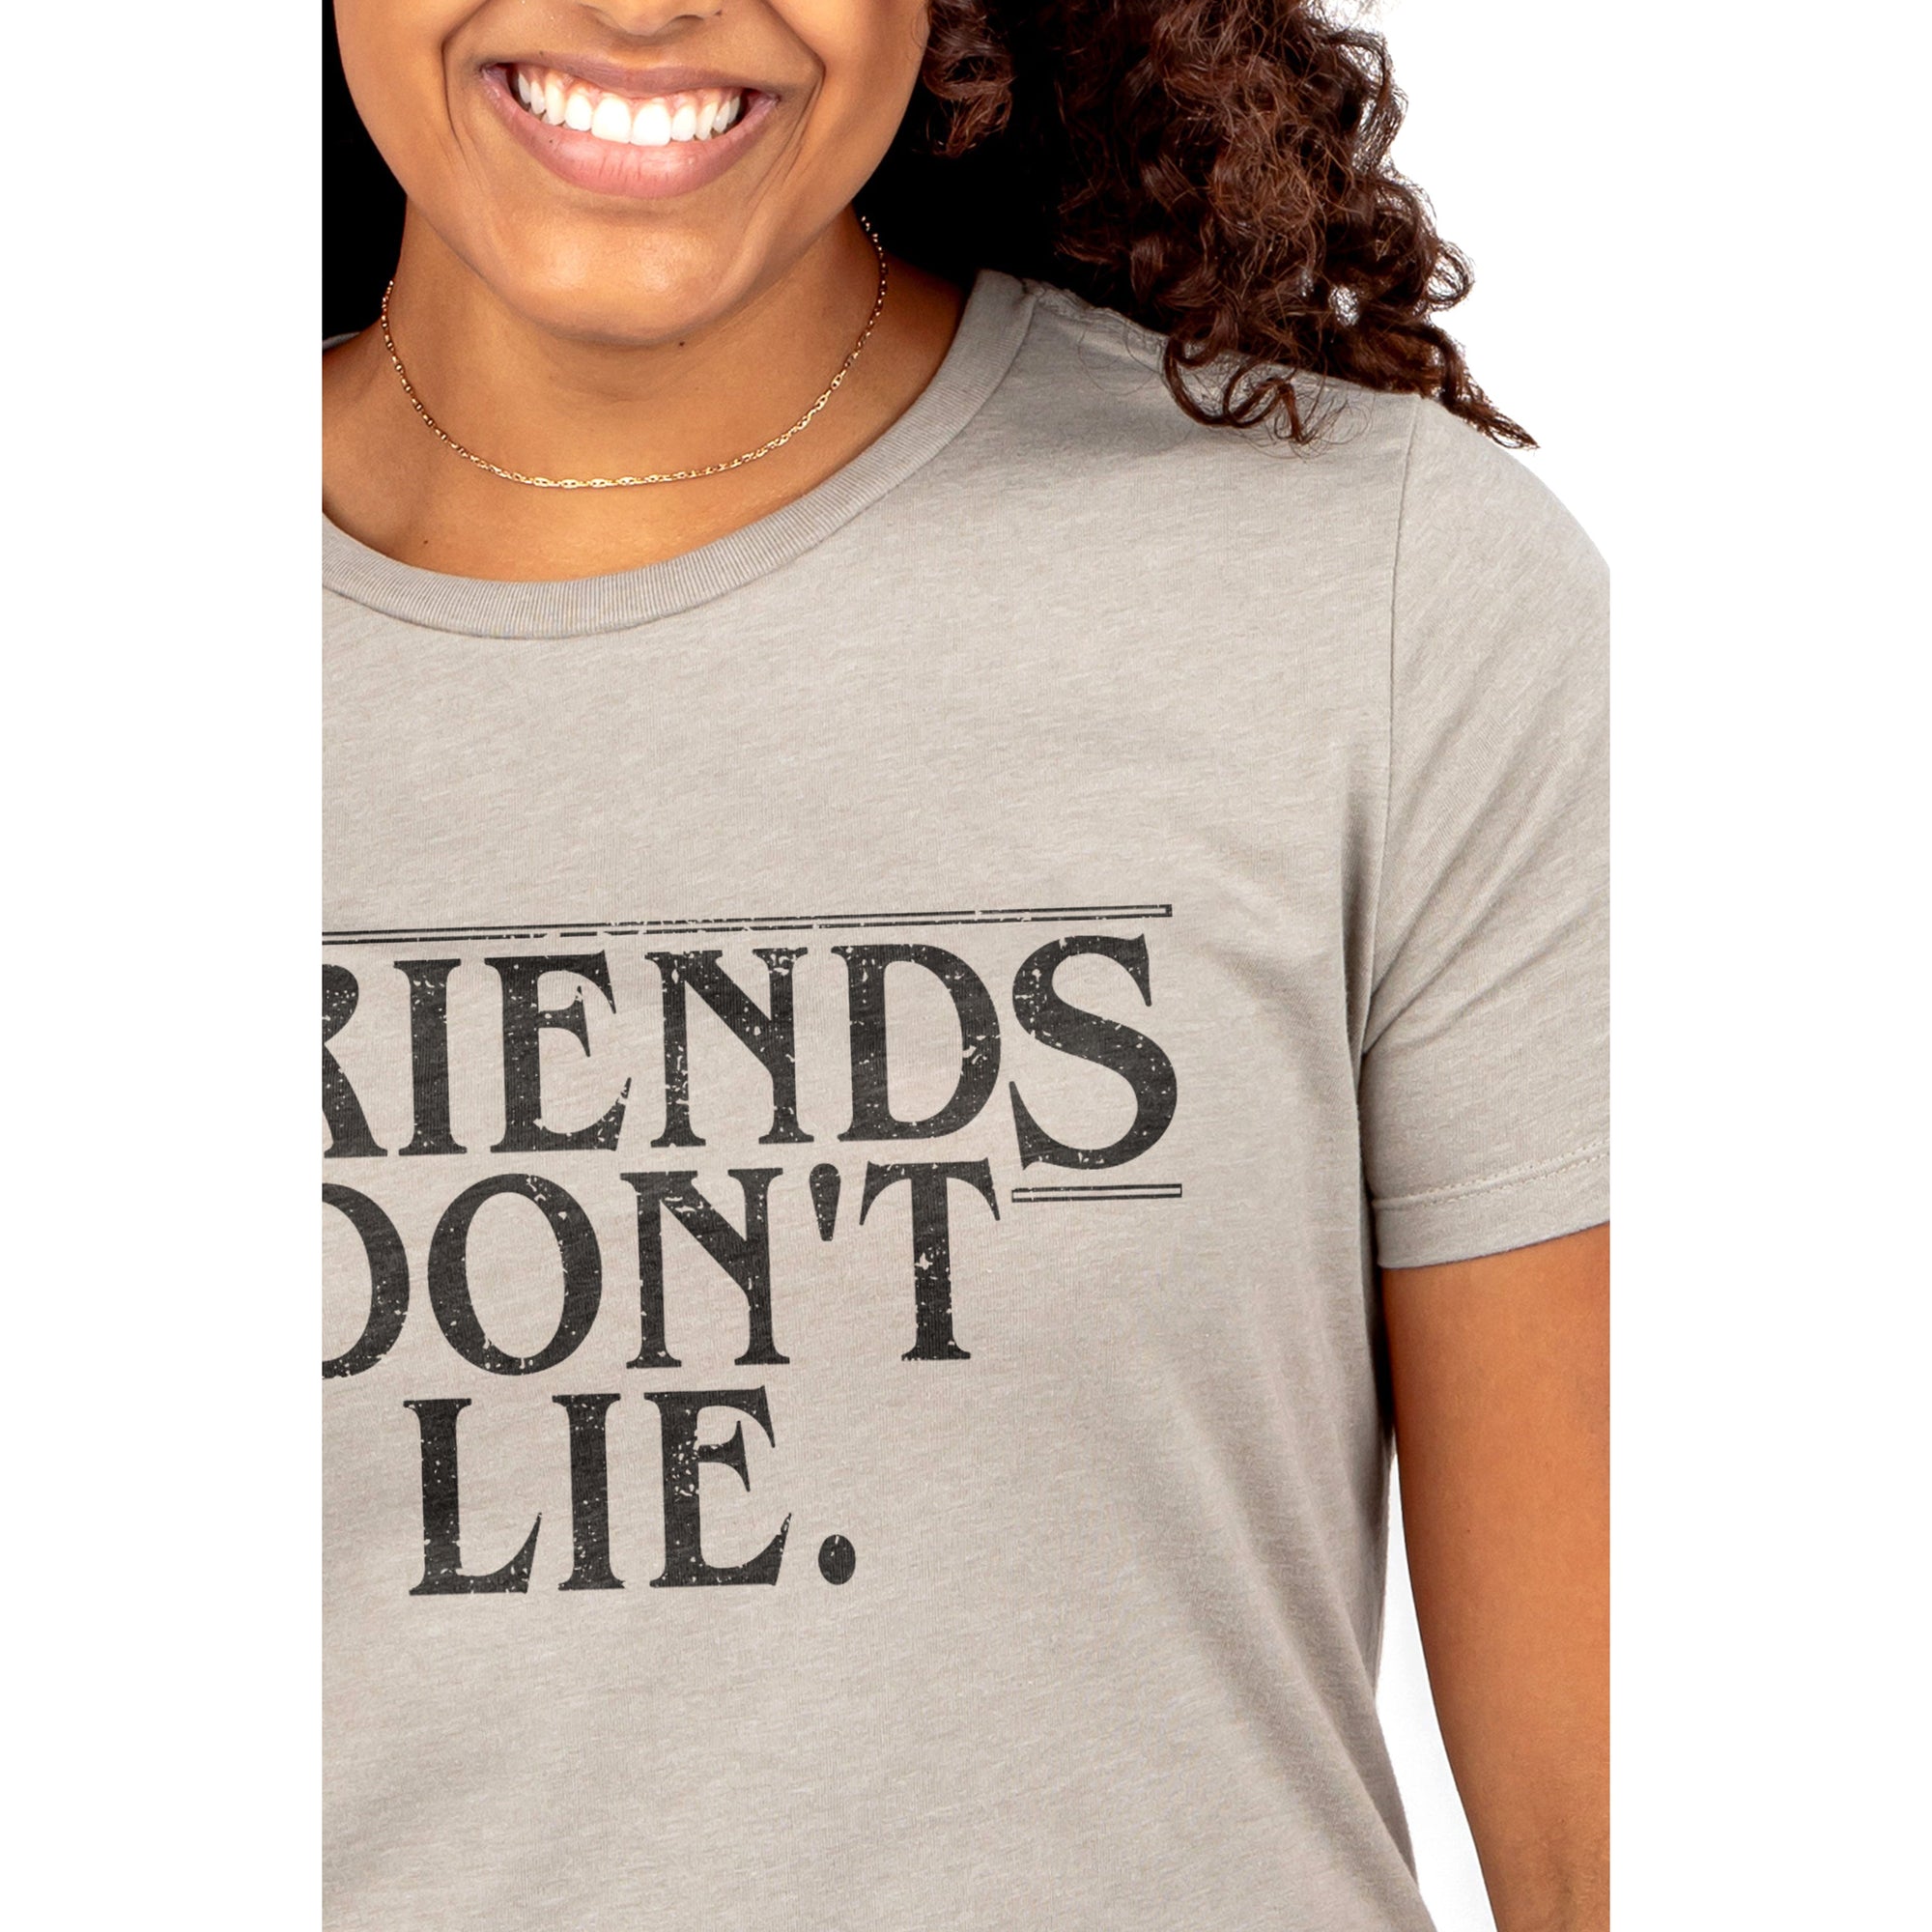 Friends Dont Lie Women's Relaxed Crewneck T-Shirt Top Tee Heather Tan Closeup Image